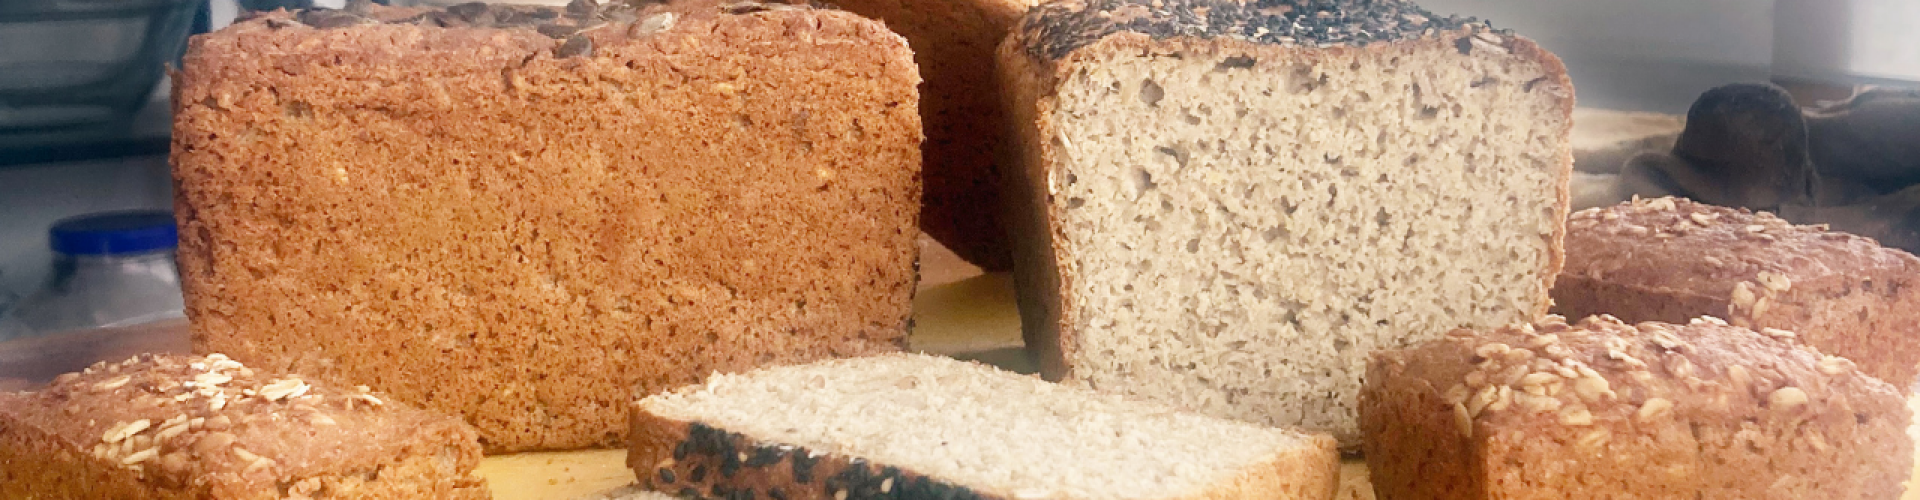 Koolhydraatarm glutenvrij brood - keto en vegan - blogpost header Marije Bakt Brood